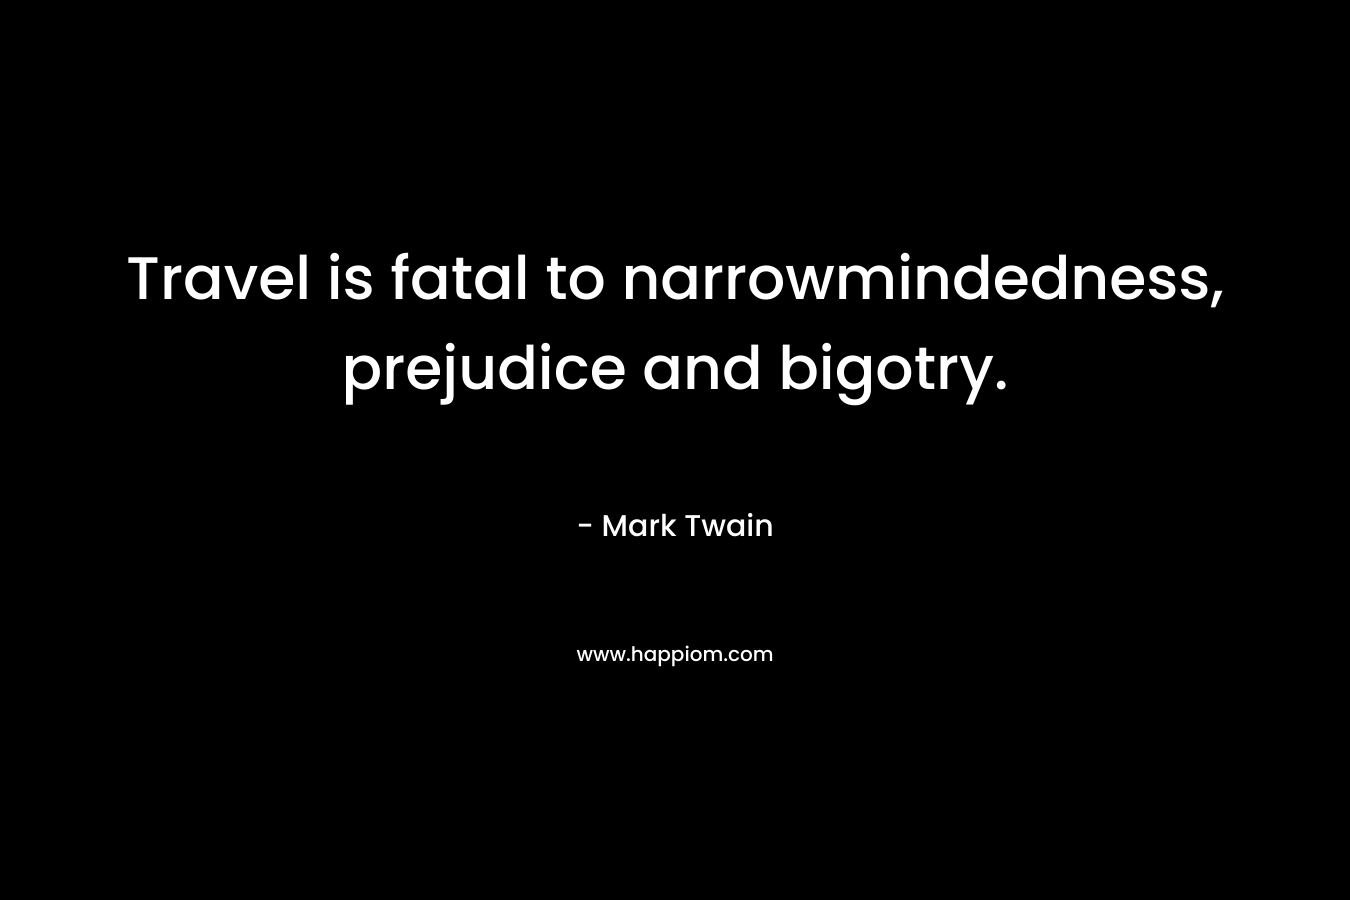 Travel is fatal to narrowmindedness, prejudice and bigotry. – Mark Twain